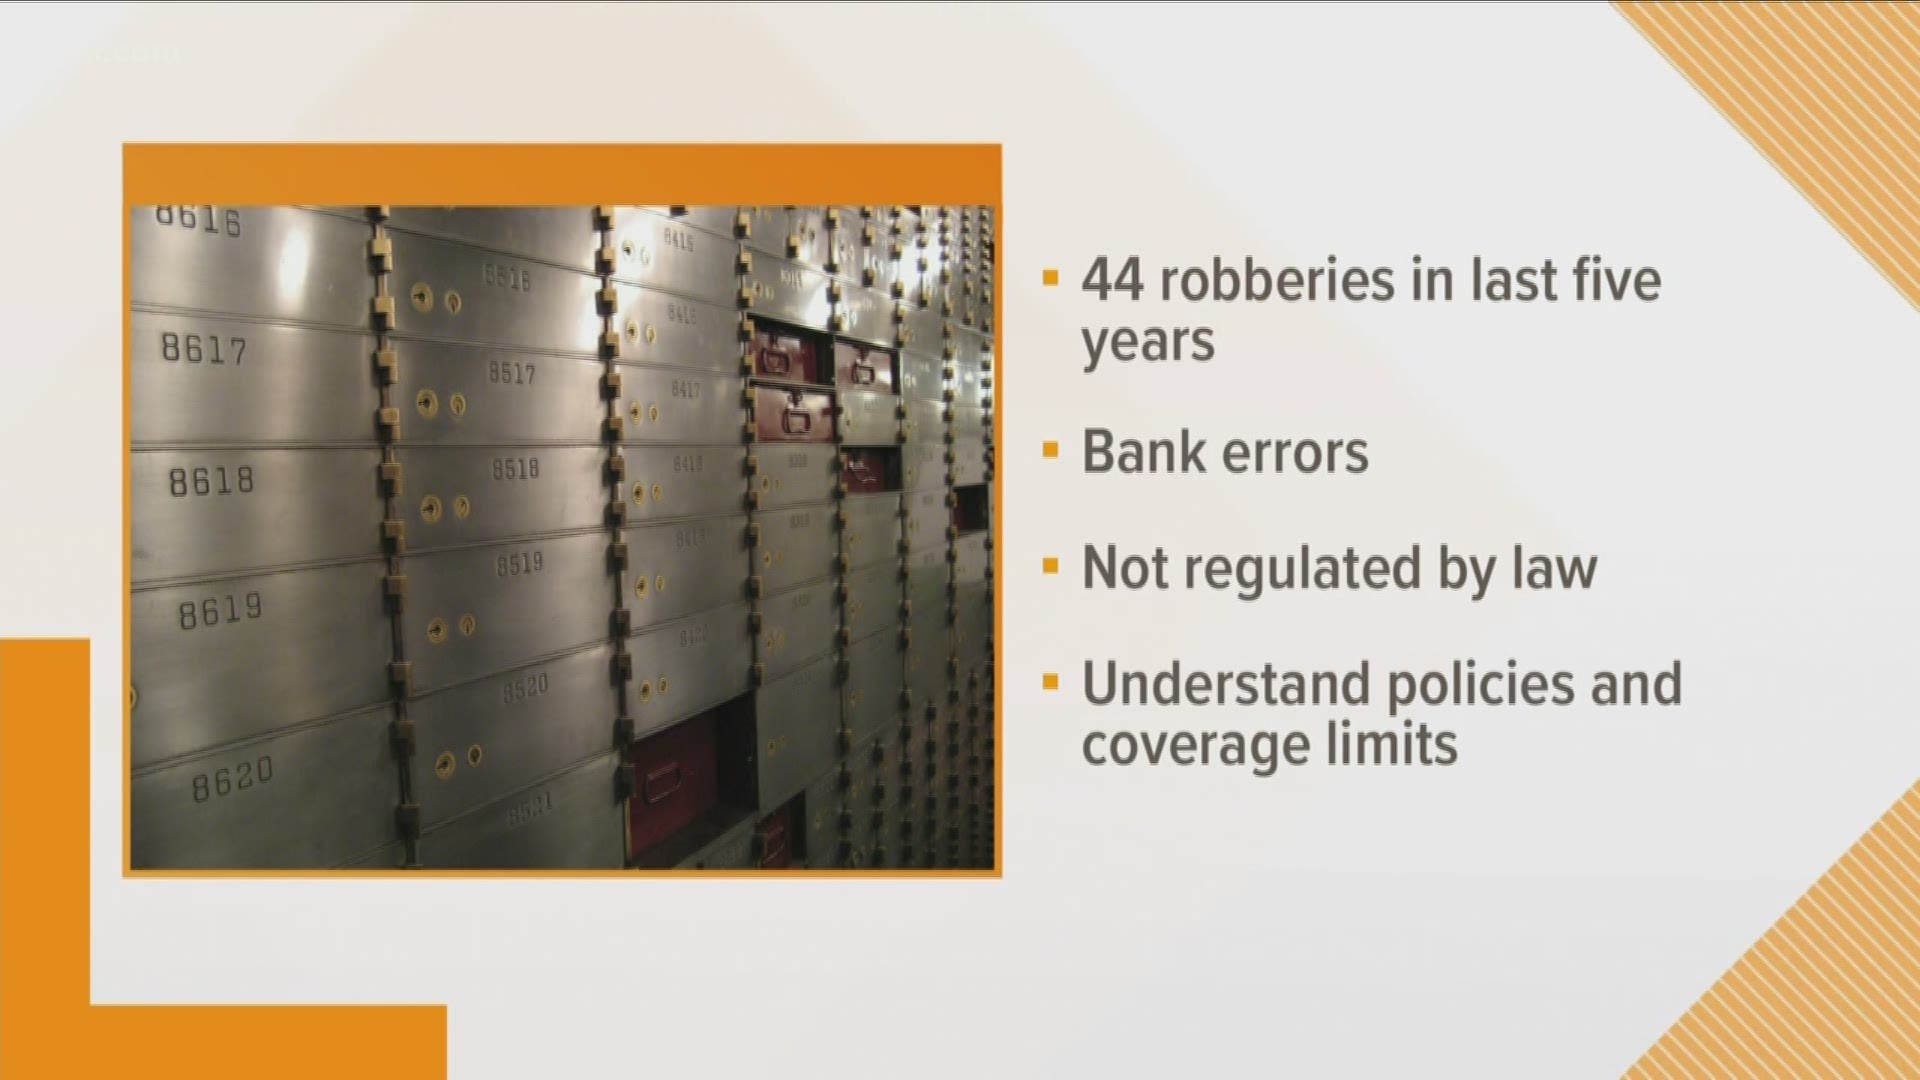 Moneyman Paul Fain discusses safety precautions of bank deposit boxes.